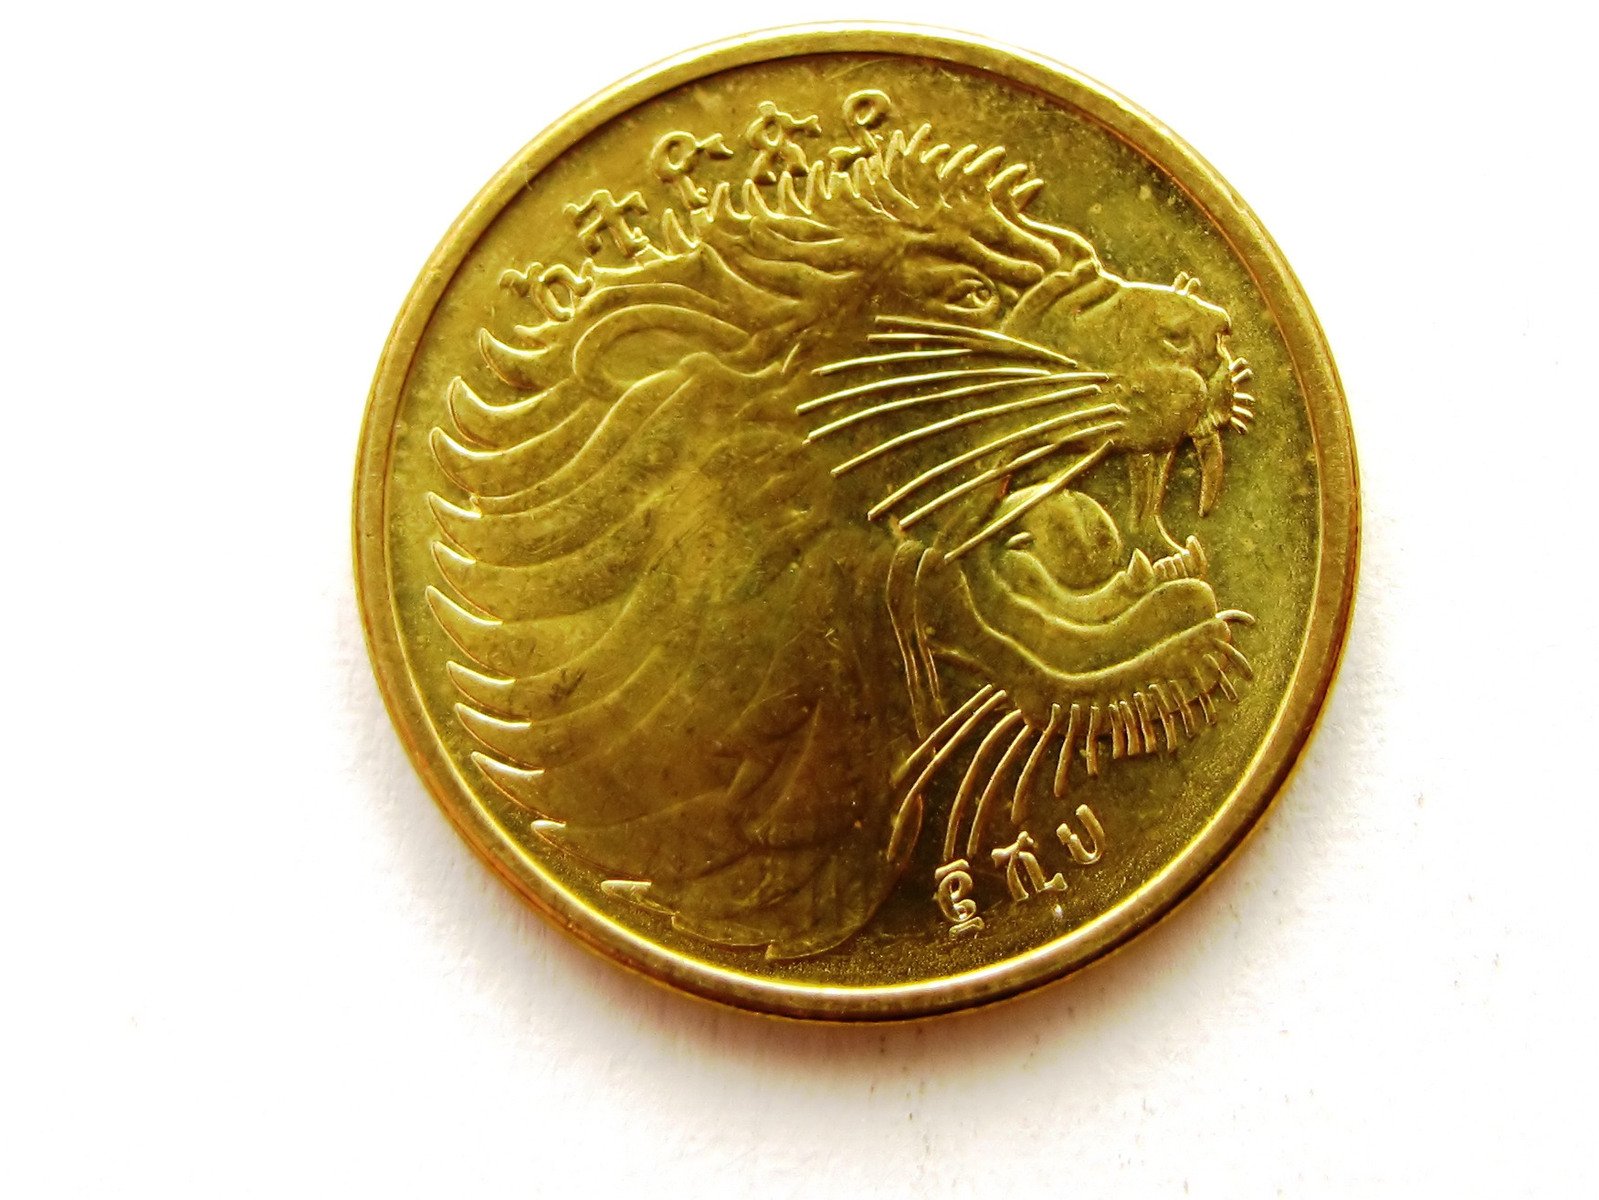 a gold coin with a tiger design